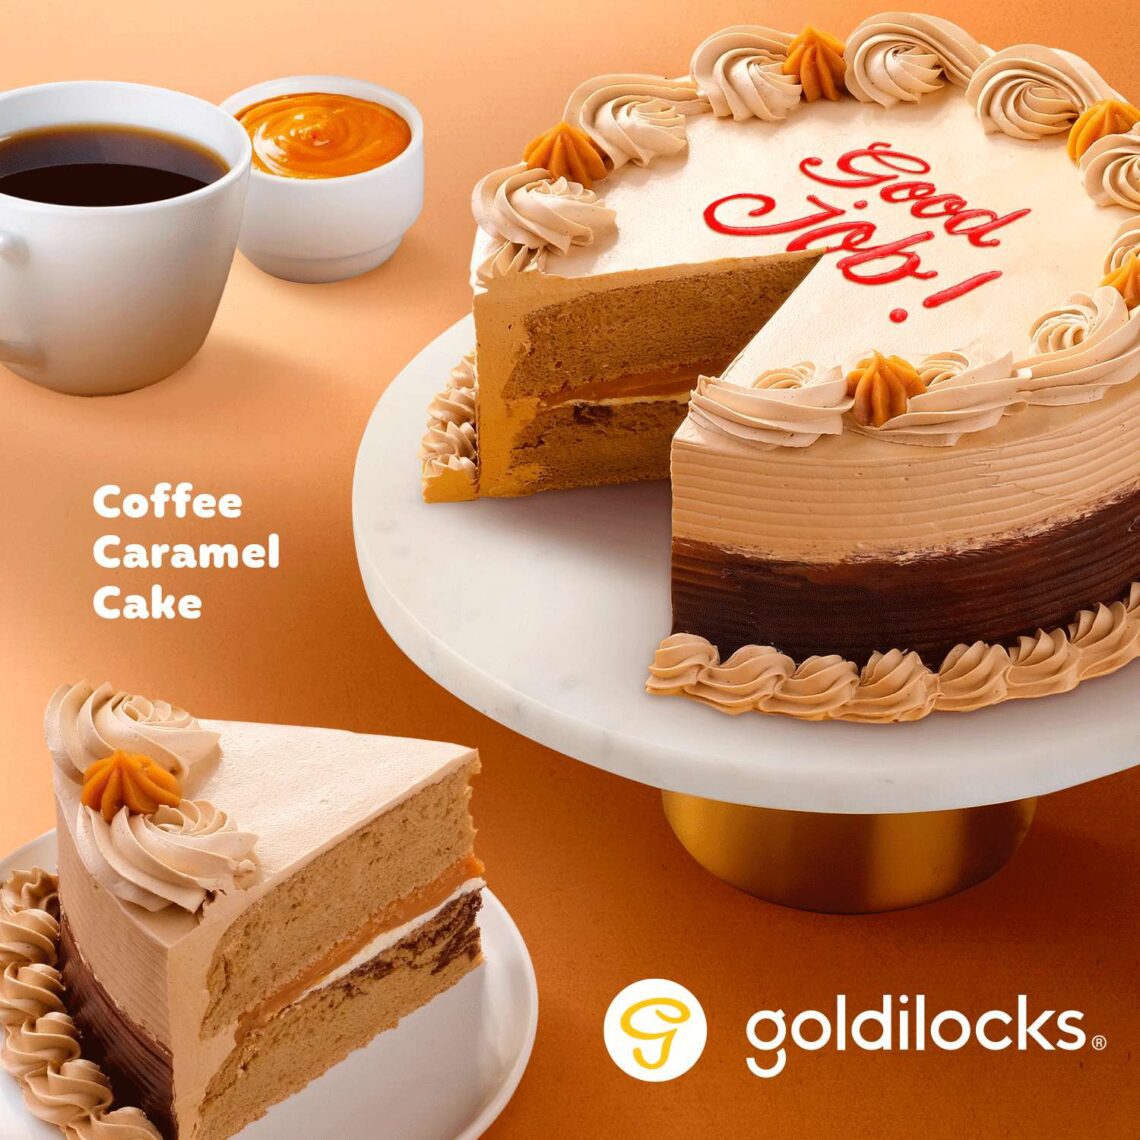 Delicious Coffee Caramel Cake from Goldilocks